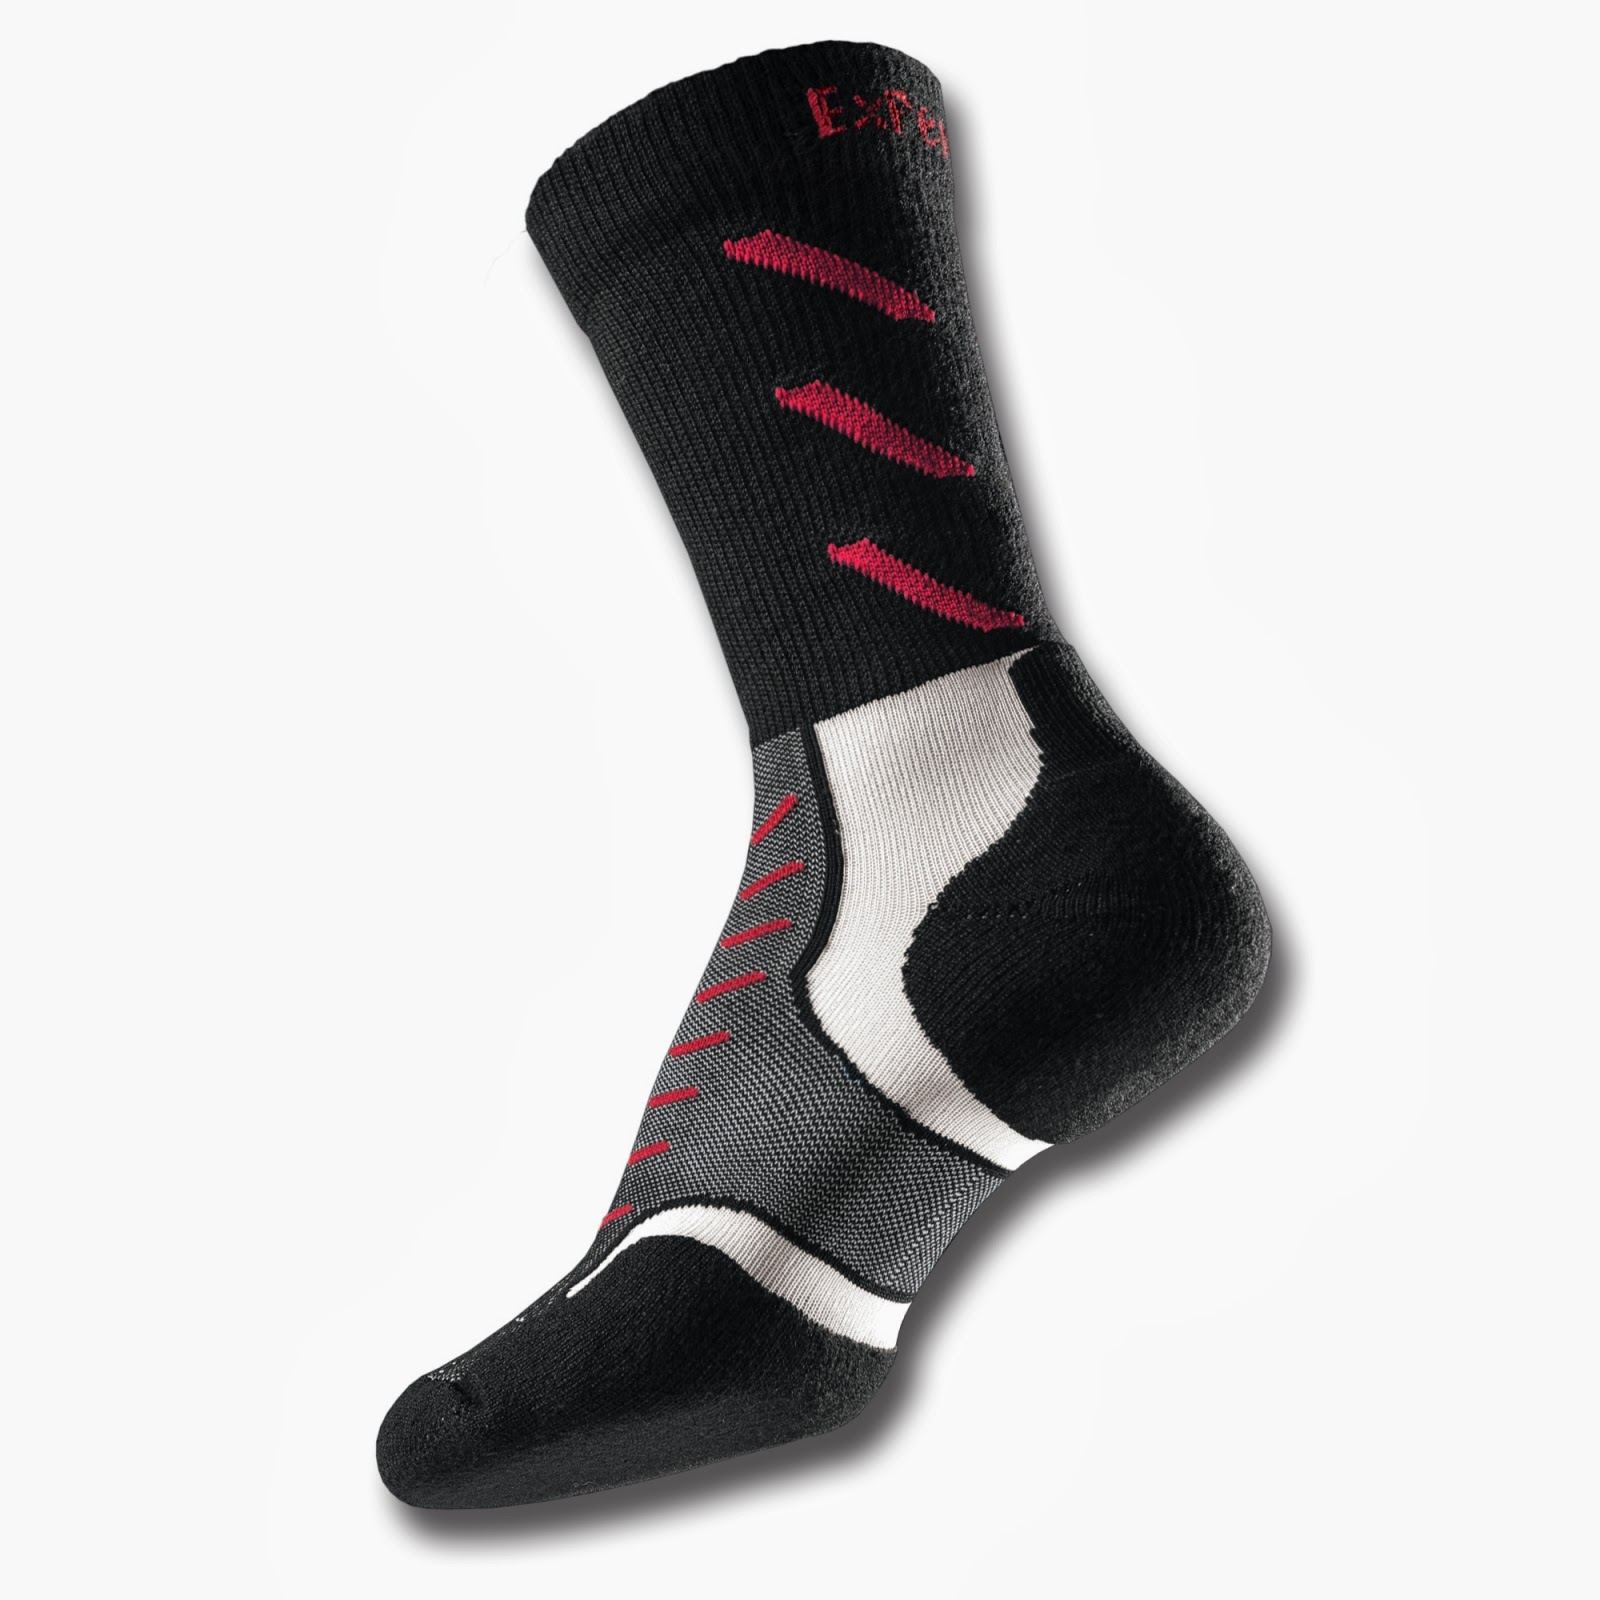 Buy Thorlo Socks Online